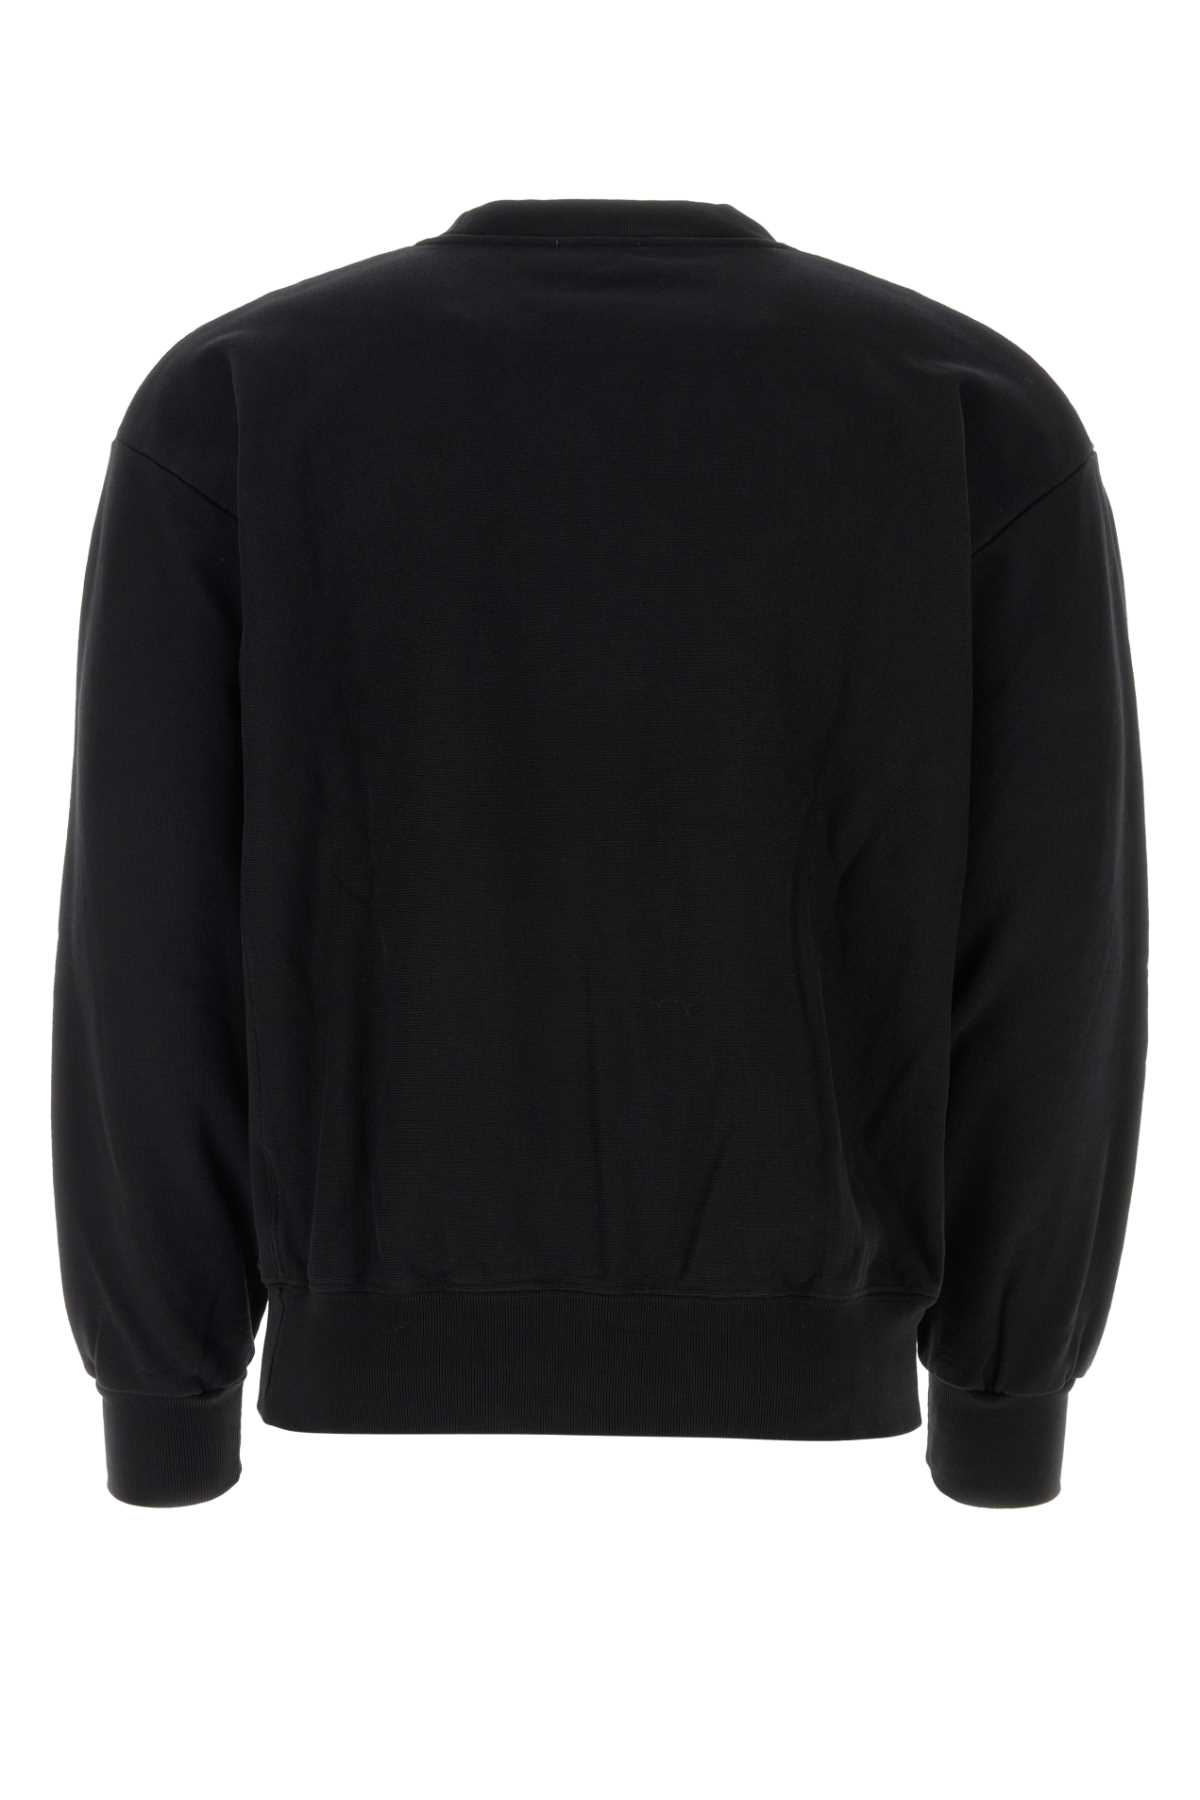 Shop Aries Black Cotton Sweatshirt